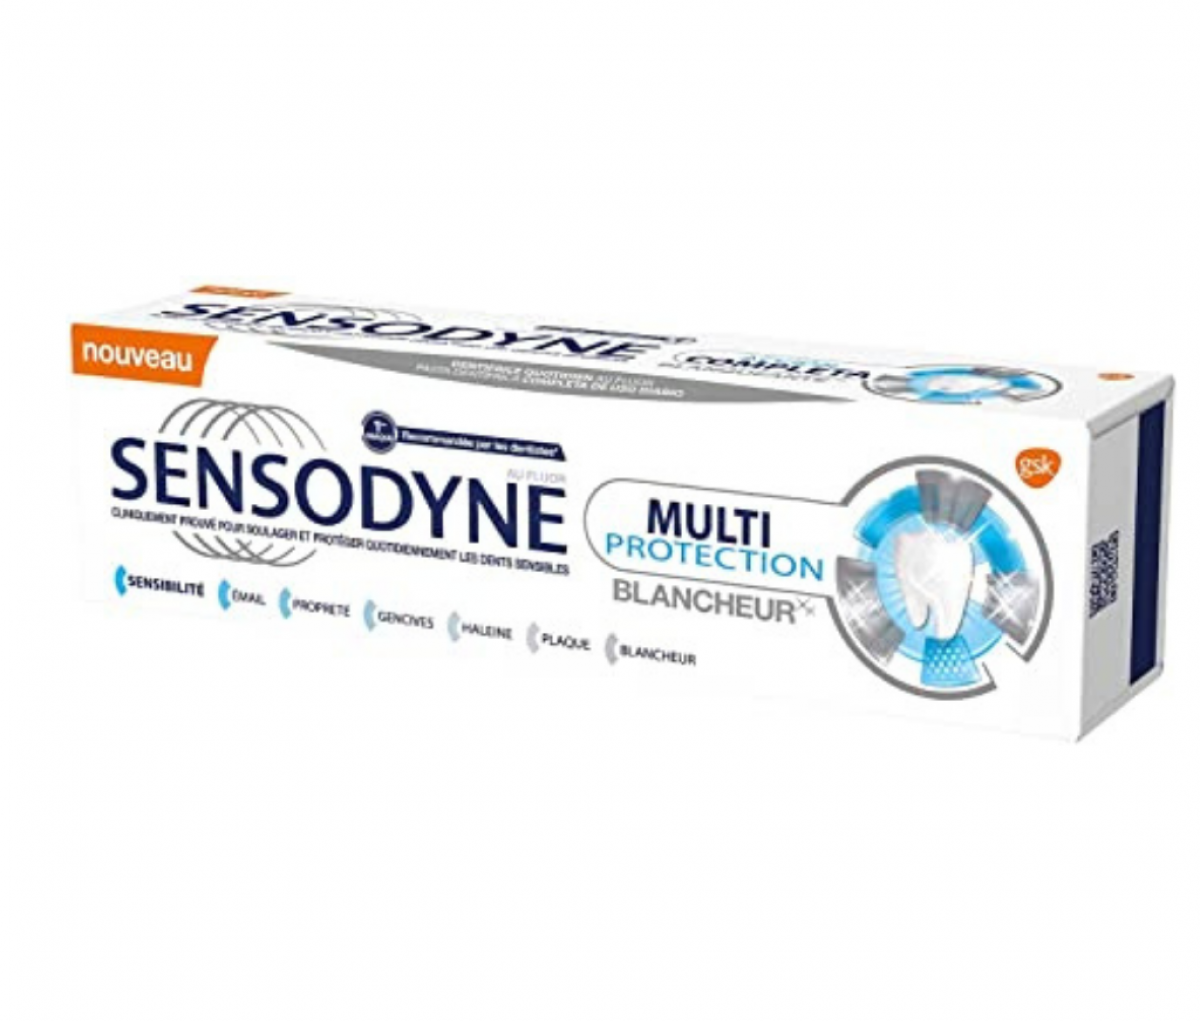 Sensodyne 75ml Multi Protection Blancheur Tooth